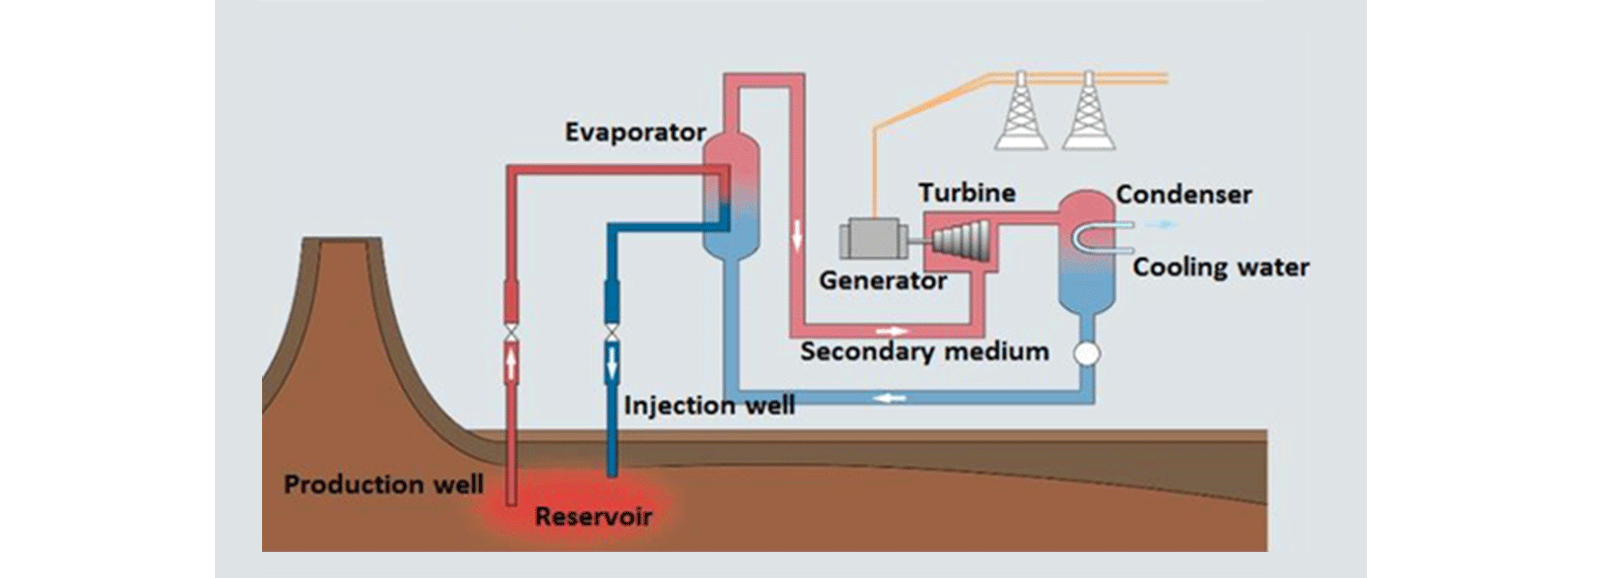 jeotermal enerji santrali ikili çevrim sistem şeması